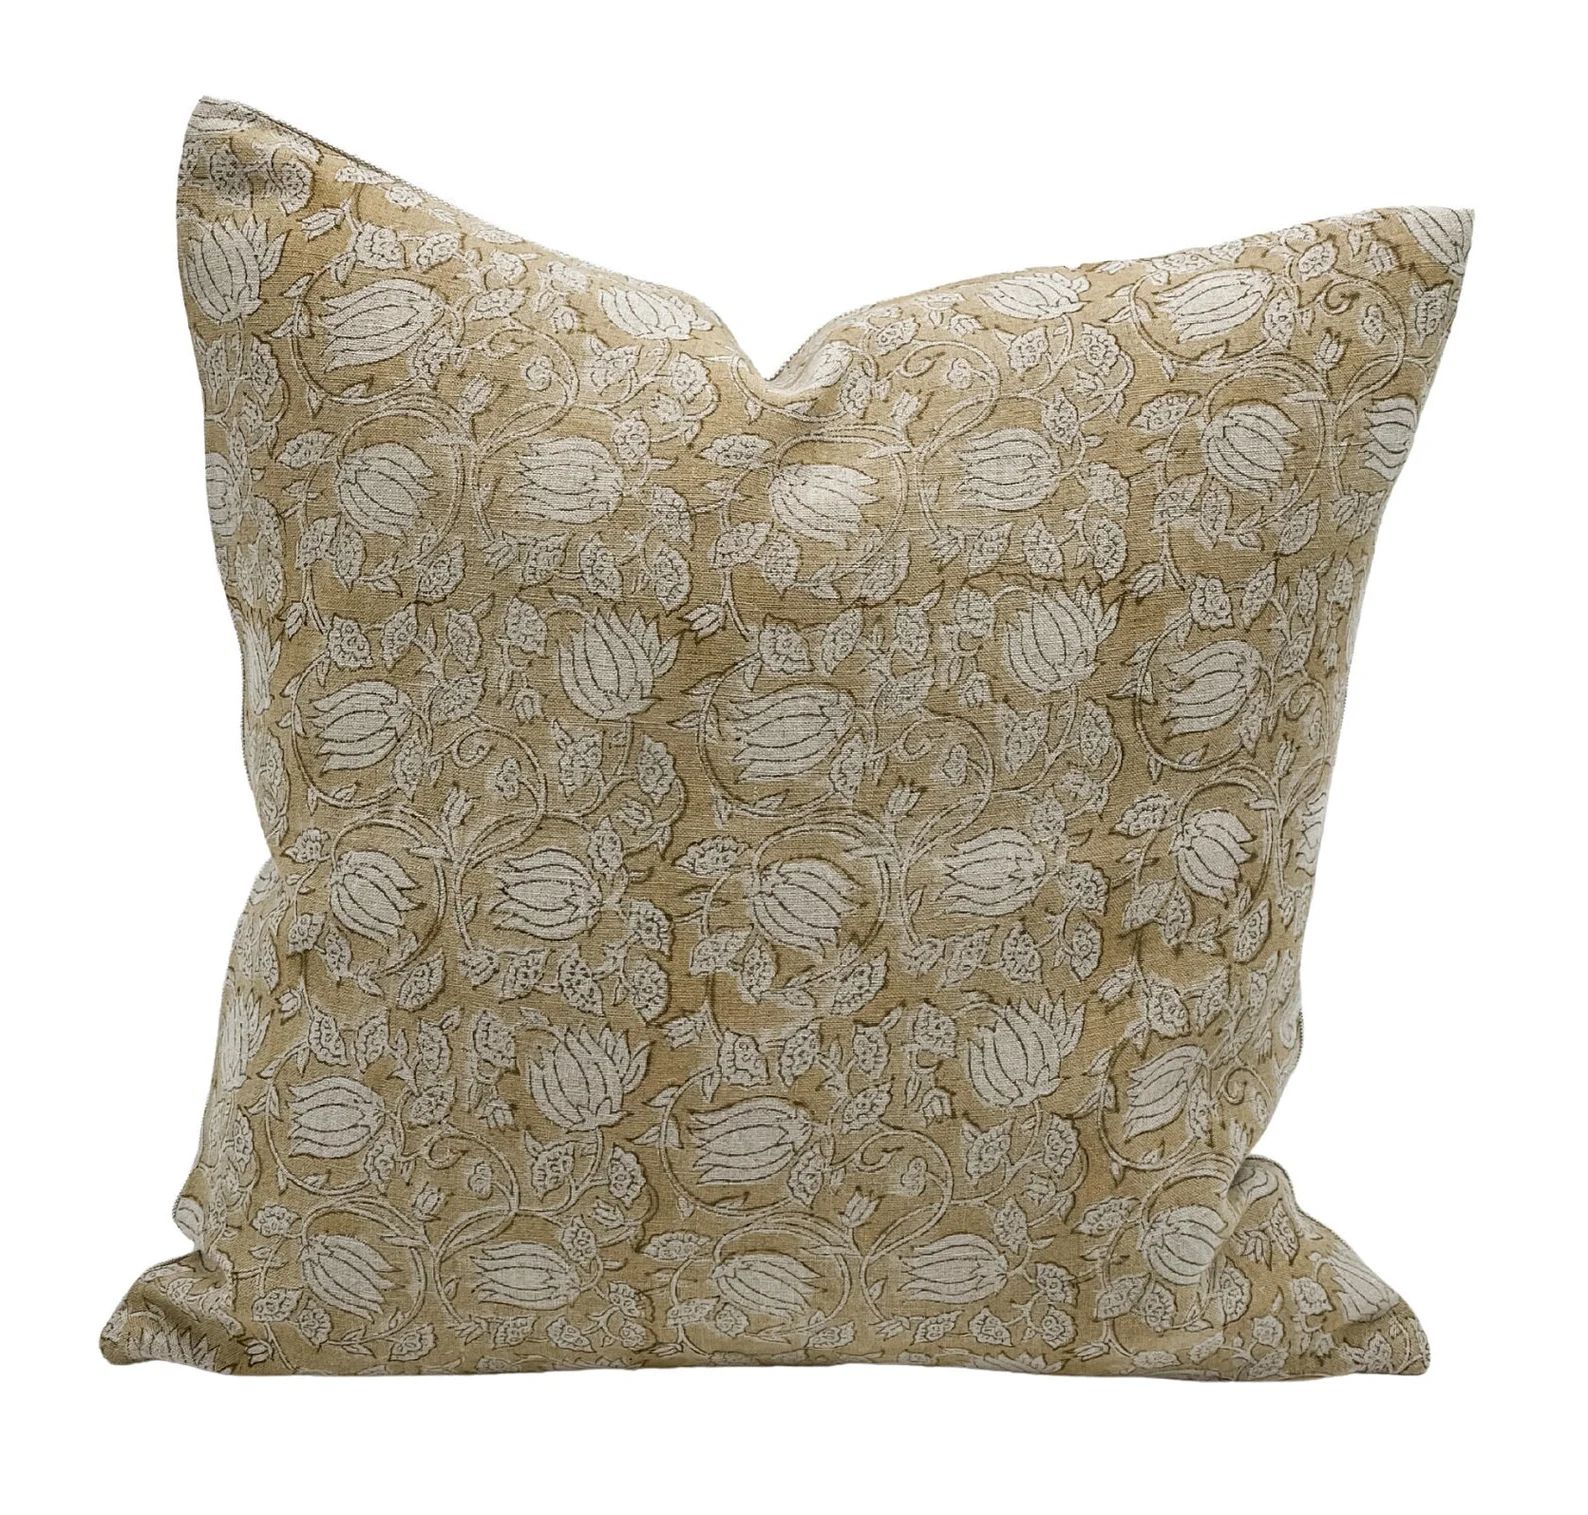 Designer Floral in Tan Beige on Natural Linen Pillow Cover - Etsy | Etsy (US)